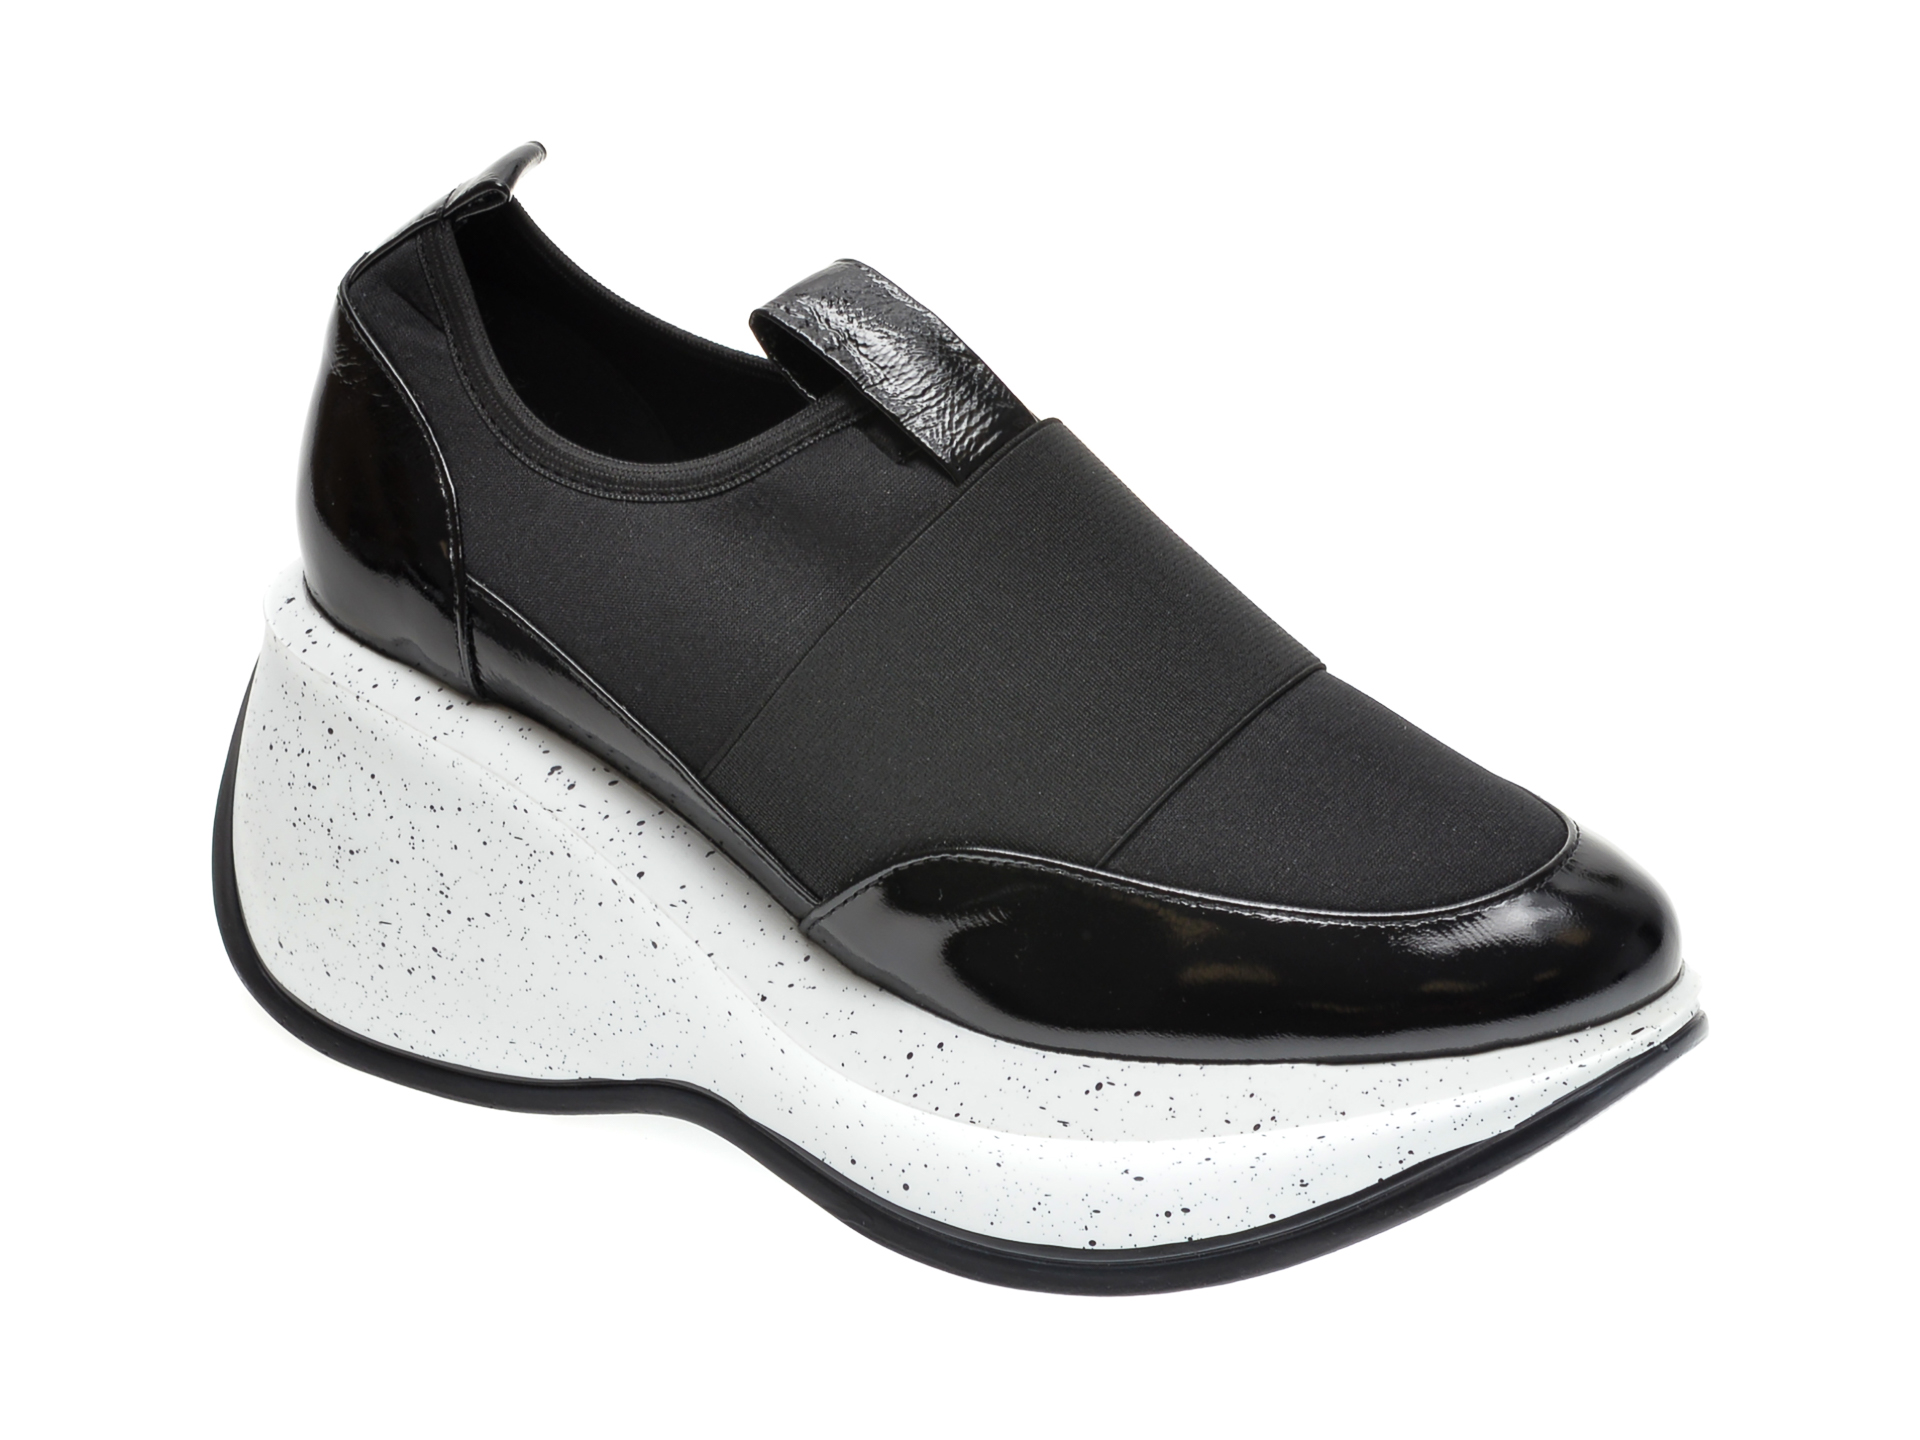 Pantofi FLAVIA PASSINI negri, 22908, din material textil si piele naturala lacuita